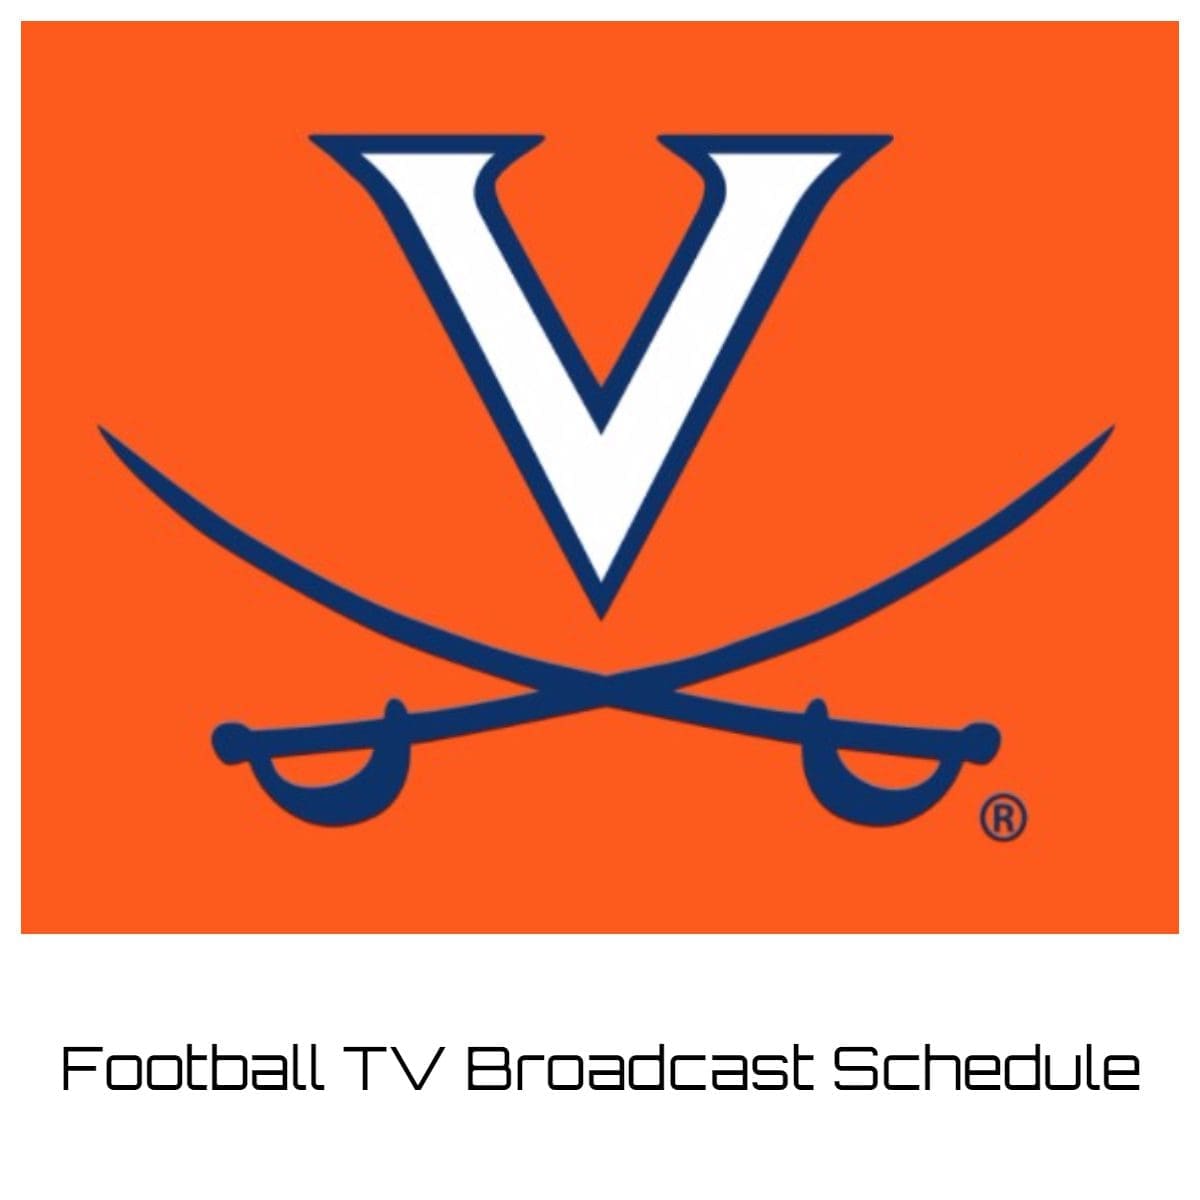 Virginia Cavaliers Football TV Broadcast Schedule